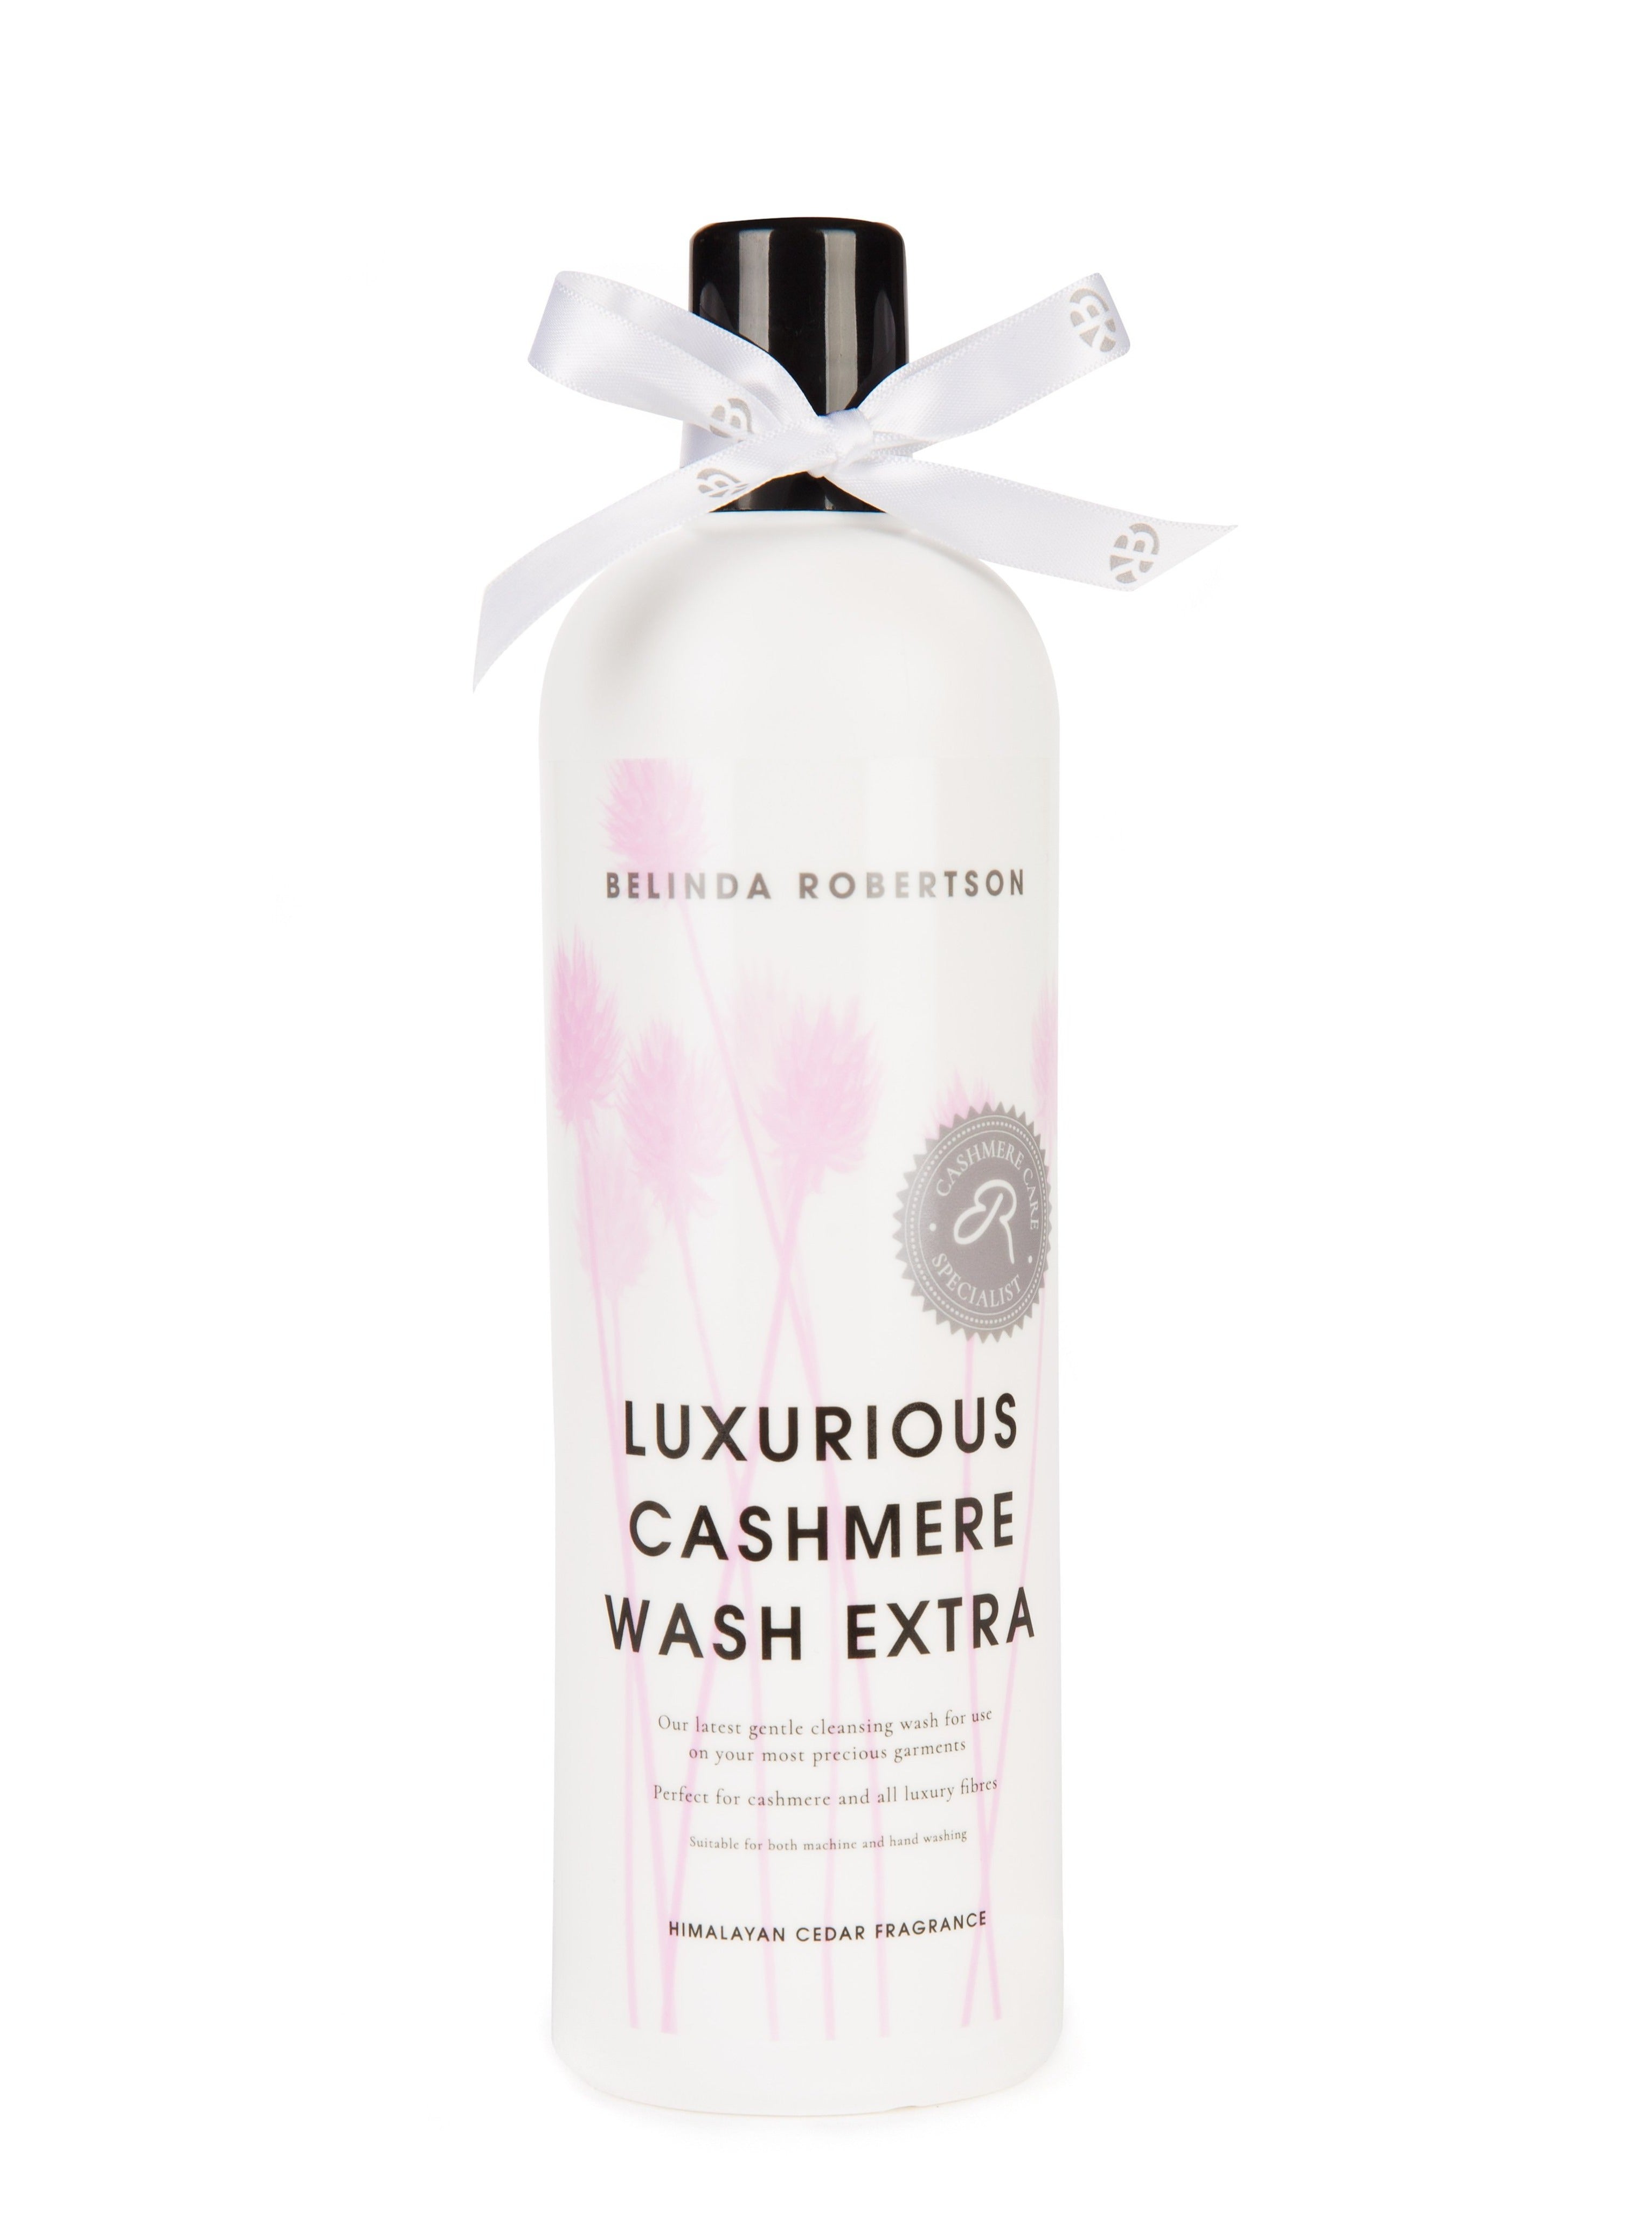 #1 Luxury Cashmere Wash | 100% Natural Ingredients | Belinda Robertson